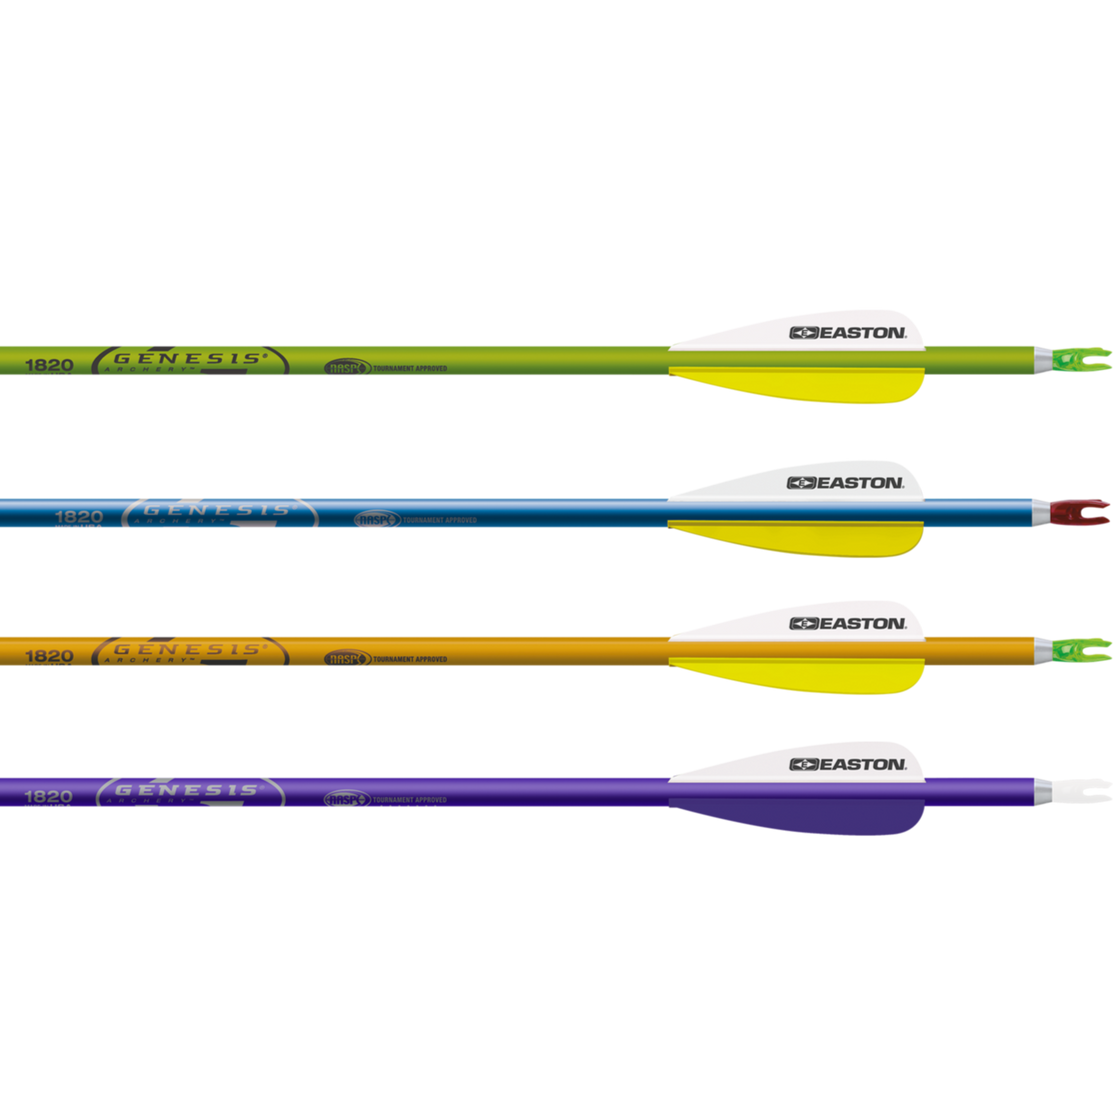 Easton Genesis 1820 Arrows